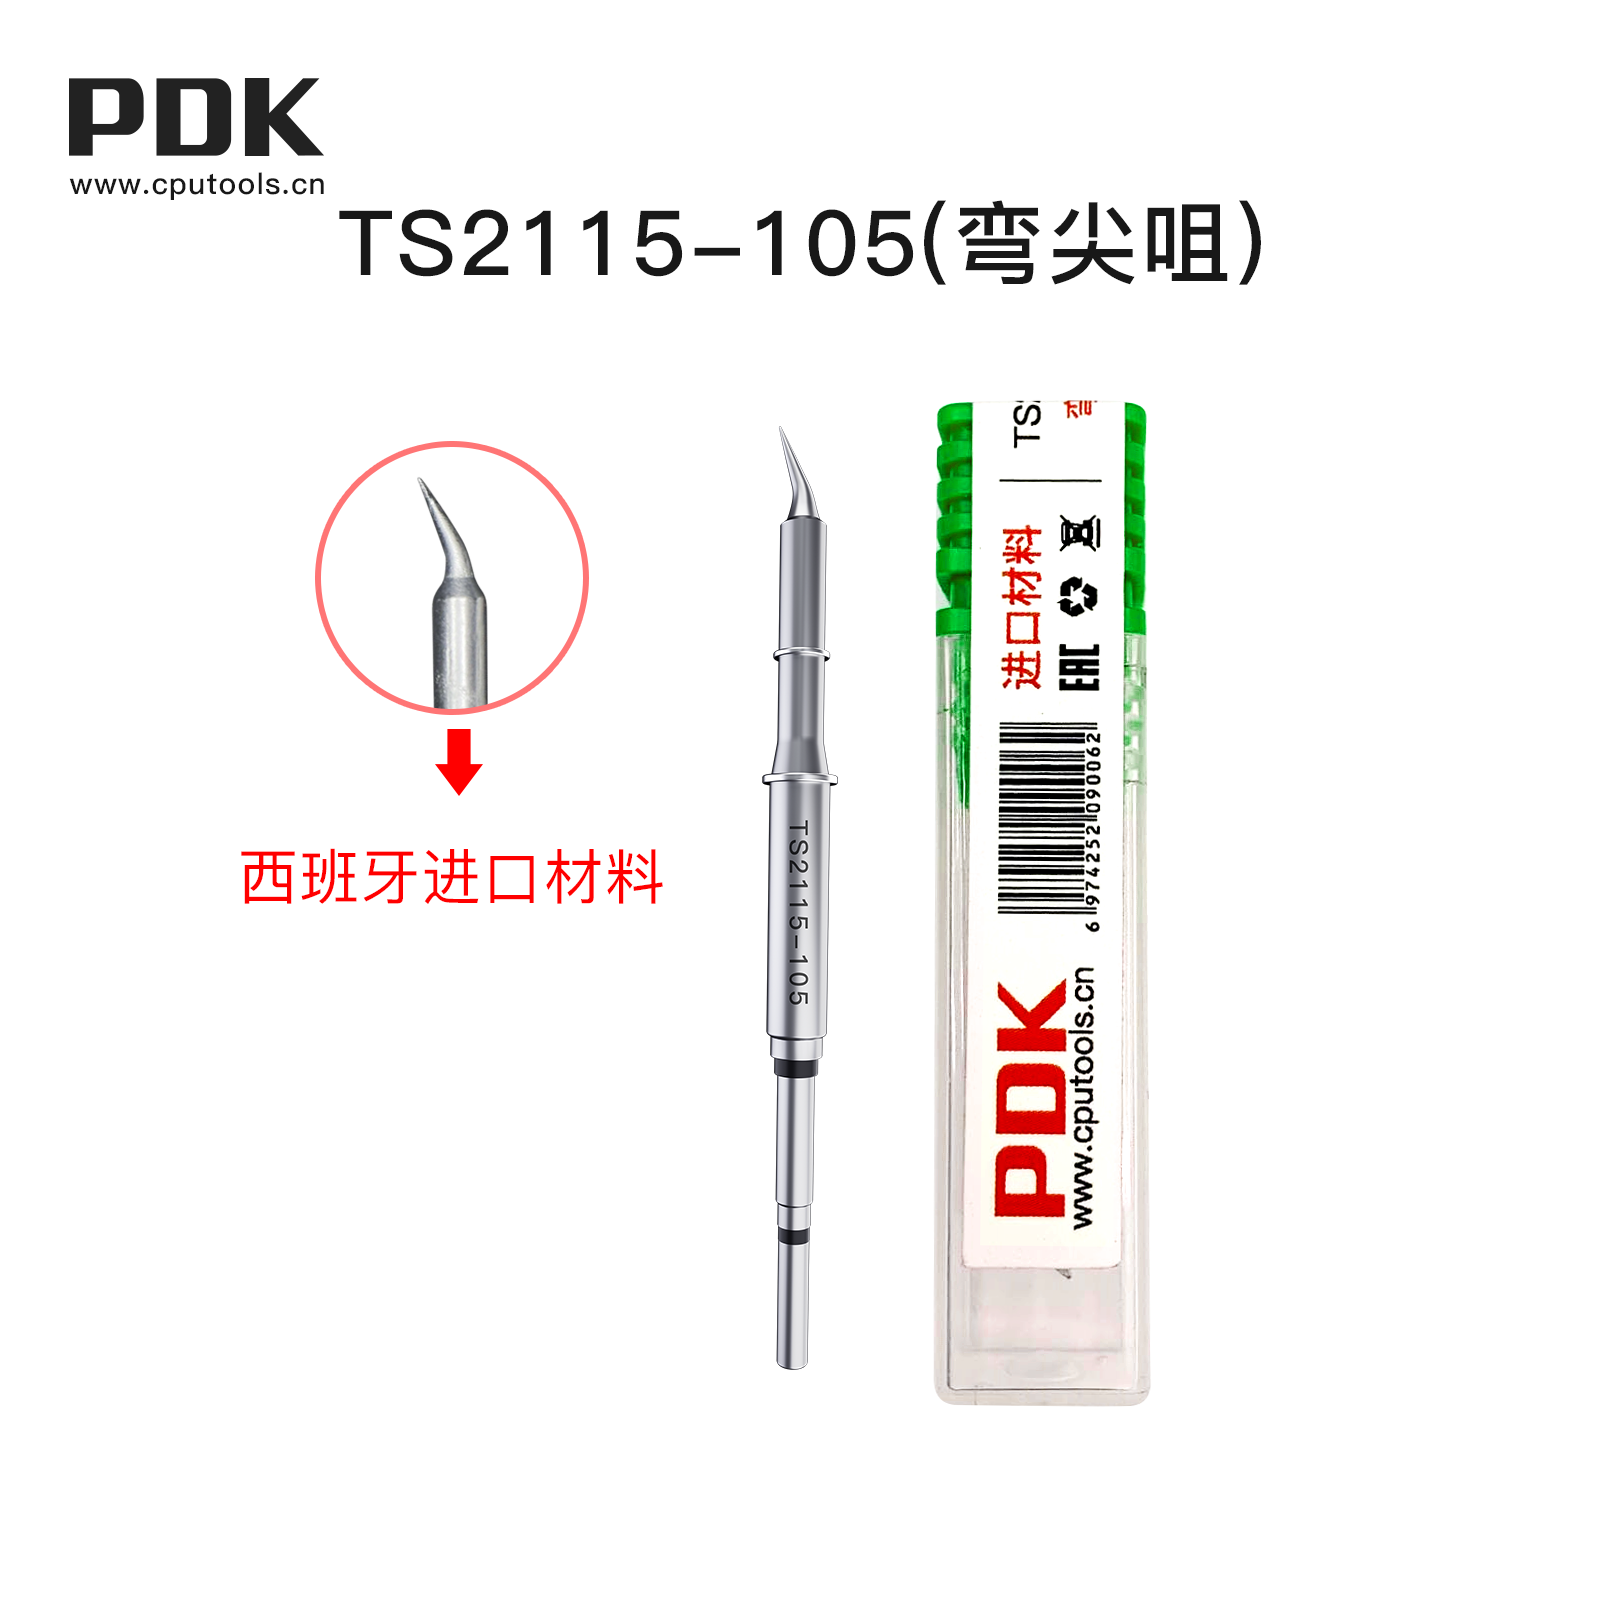 PDK TS2115 Series soldering iron head(图3)